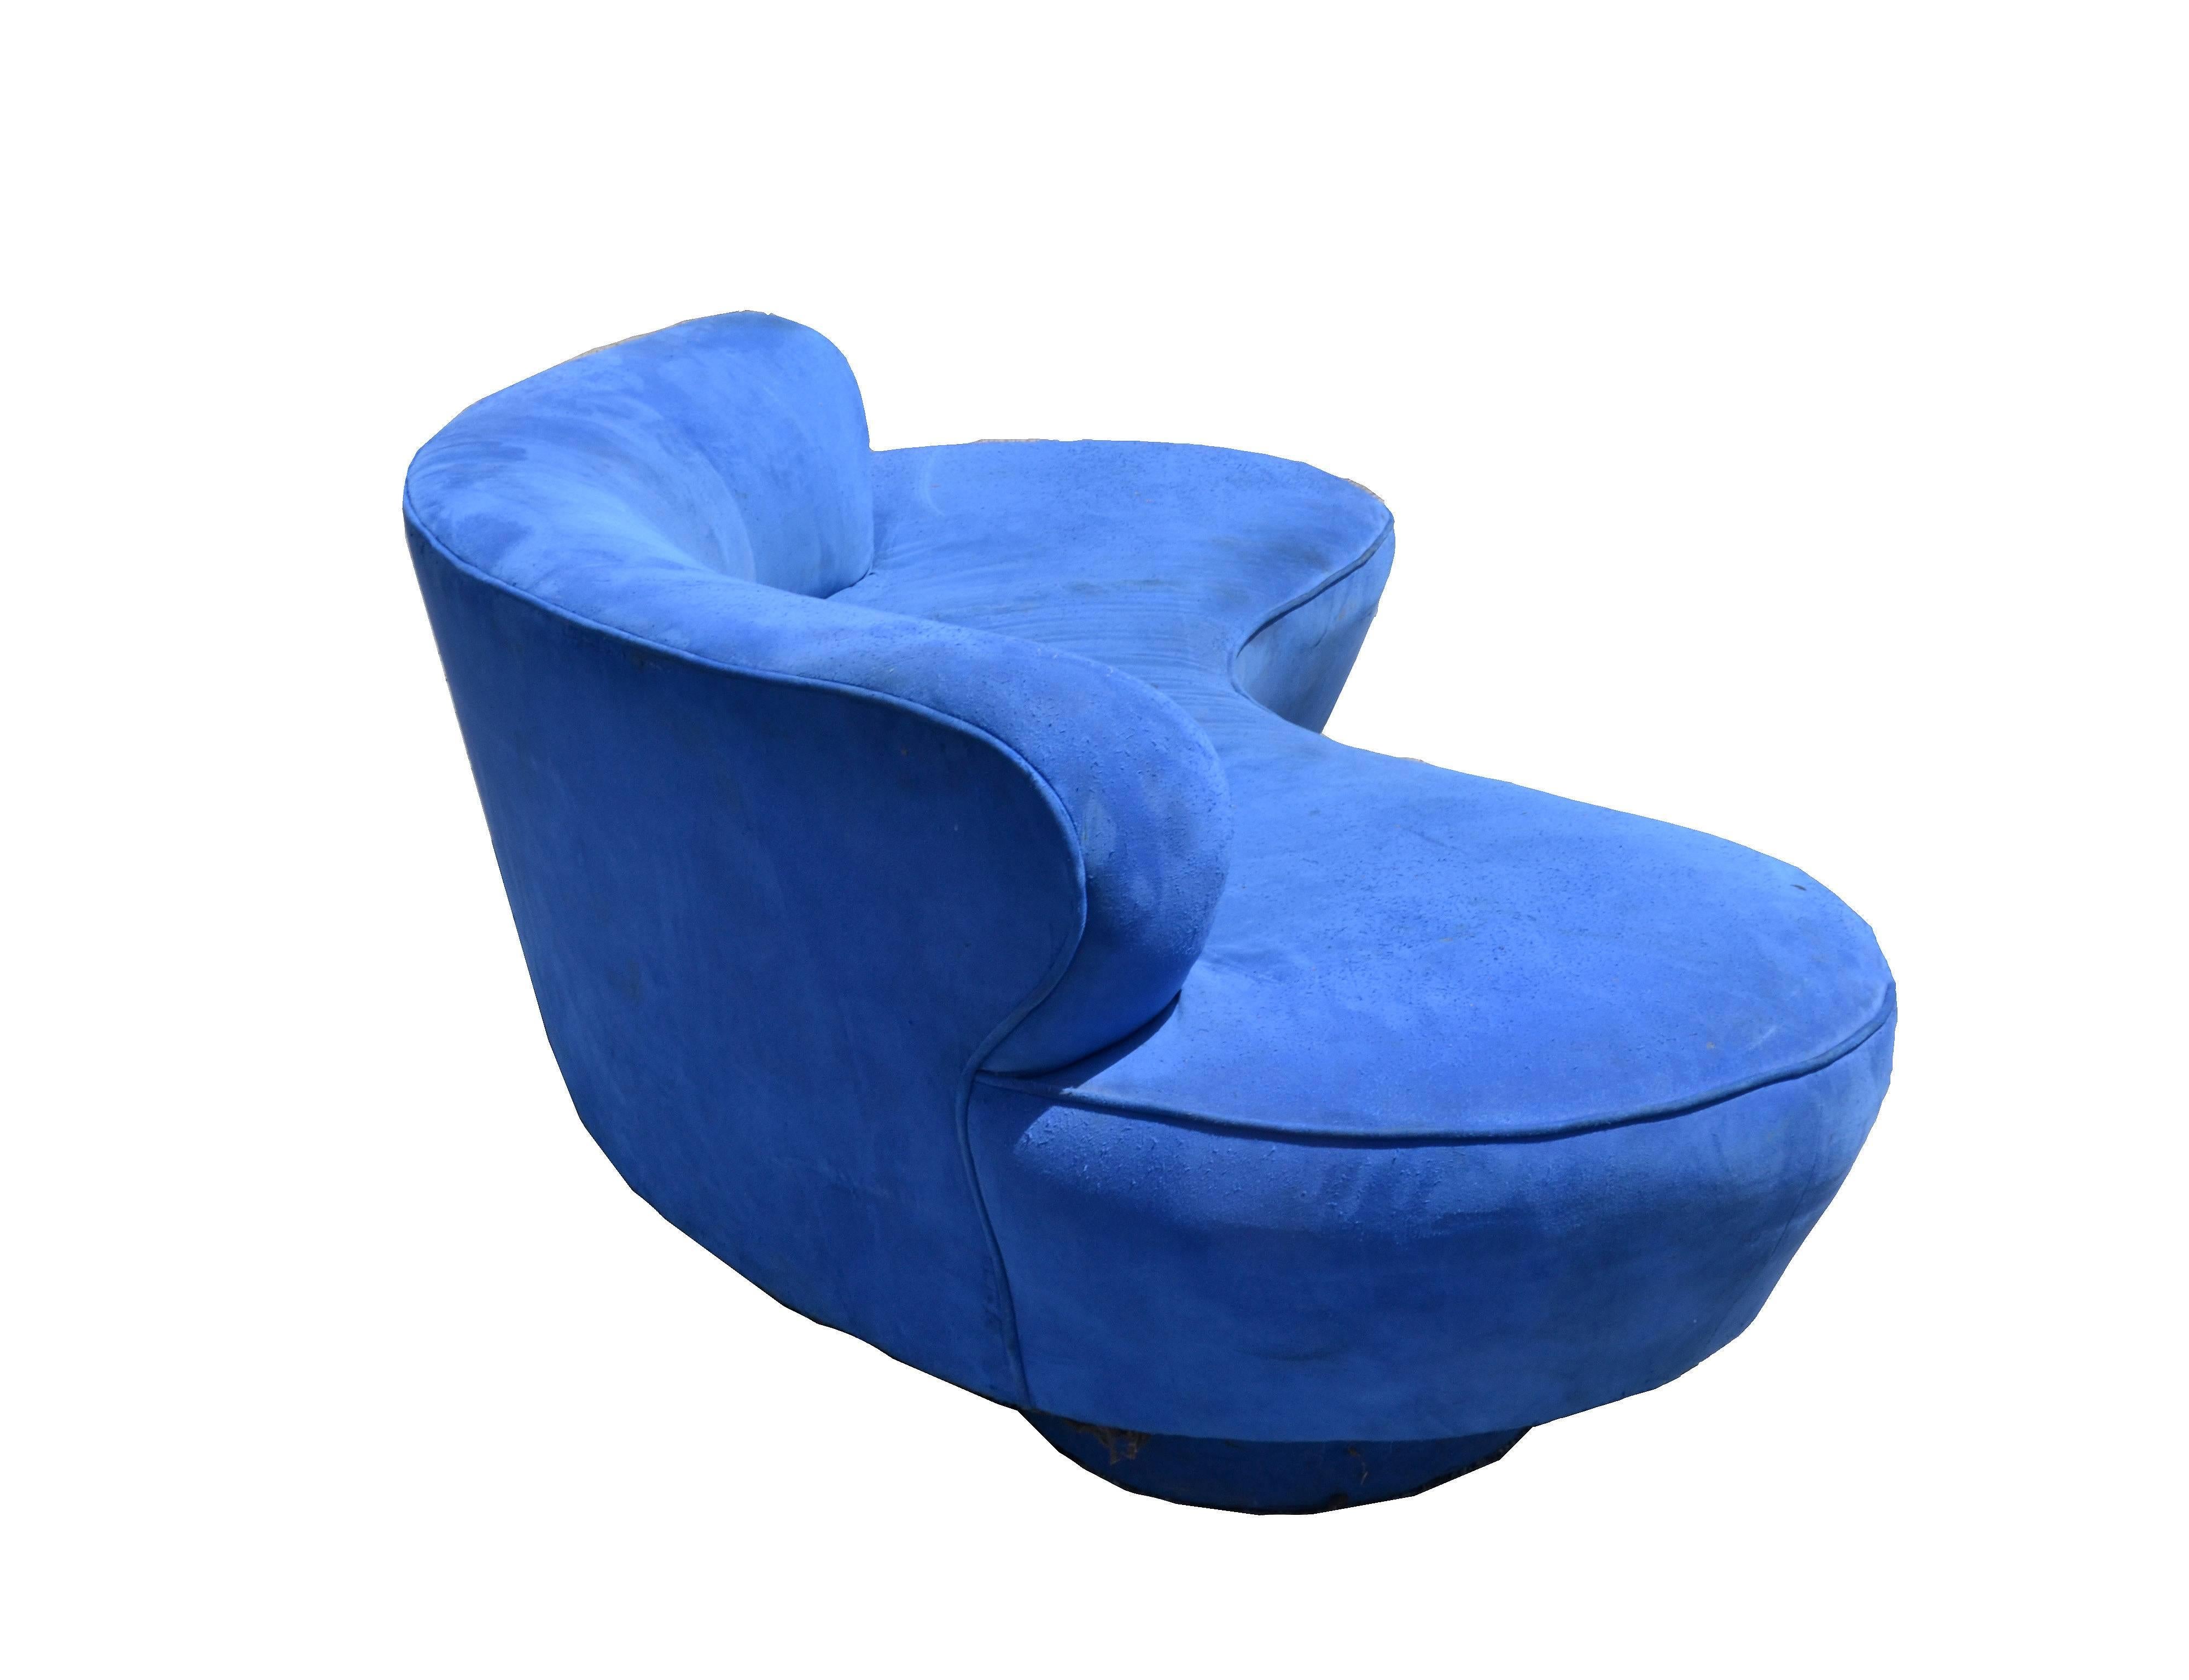 American Vintage Vladimir Kagan Serpentine Sofa Blue Microfiber by Directional Furniture  For Sale